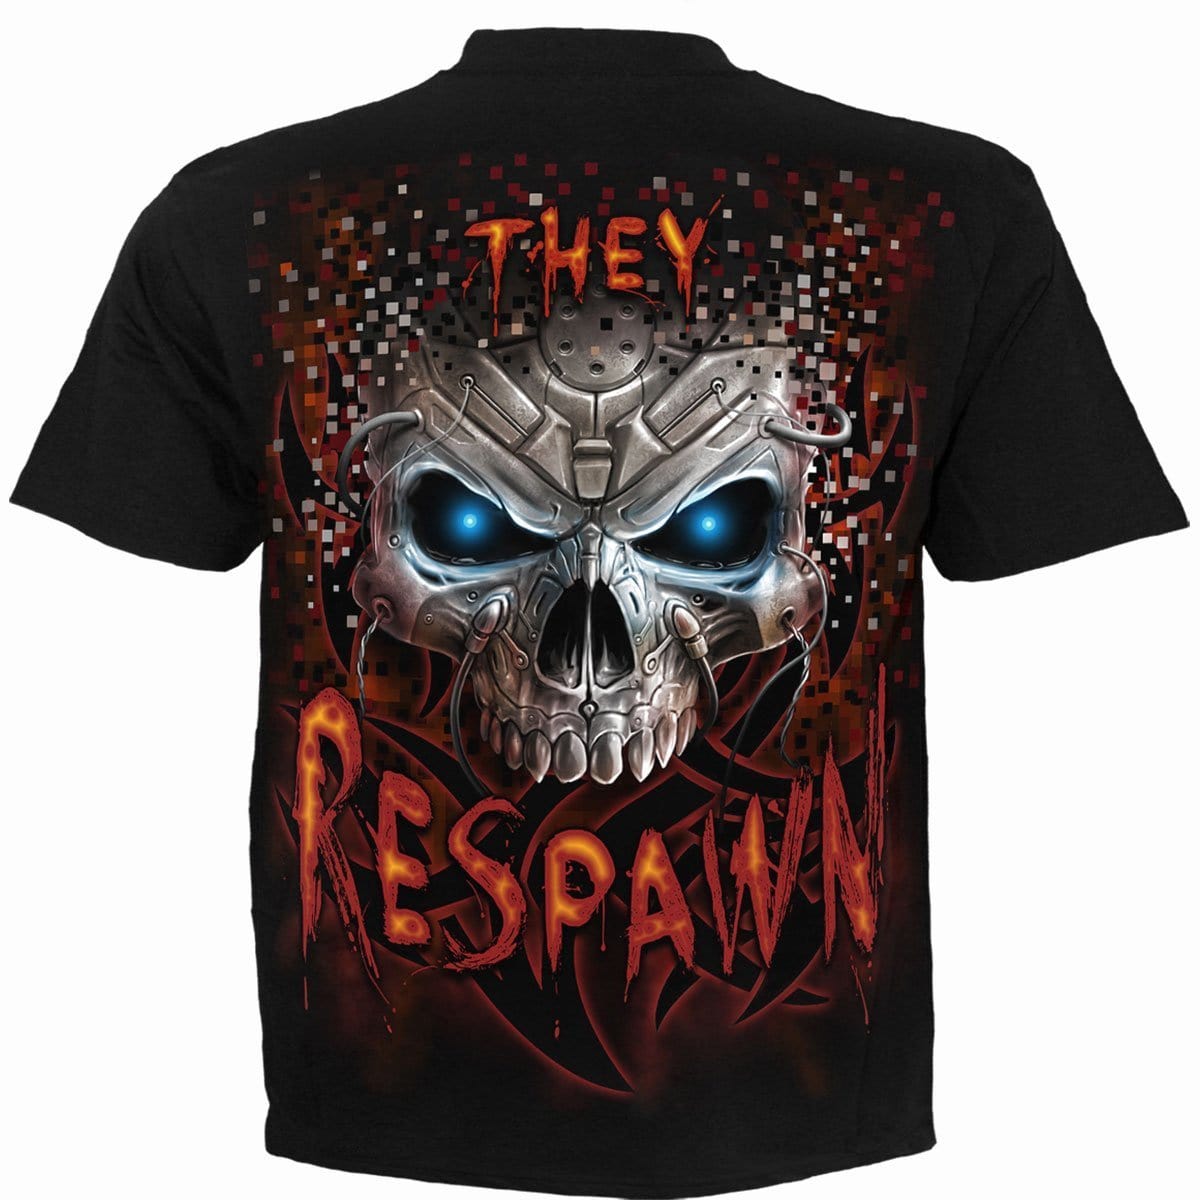 RESPAWN - Kids T-Shirt Black - Spiral USA